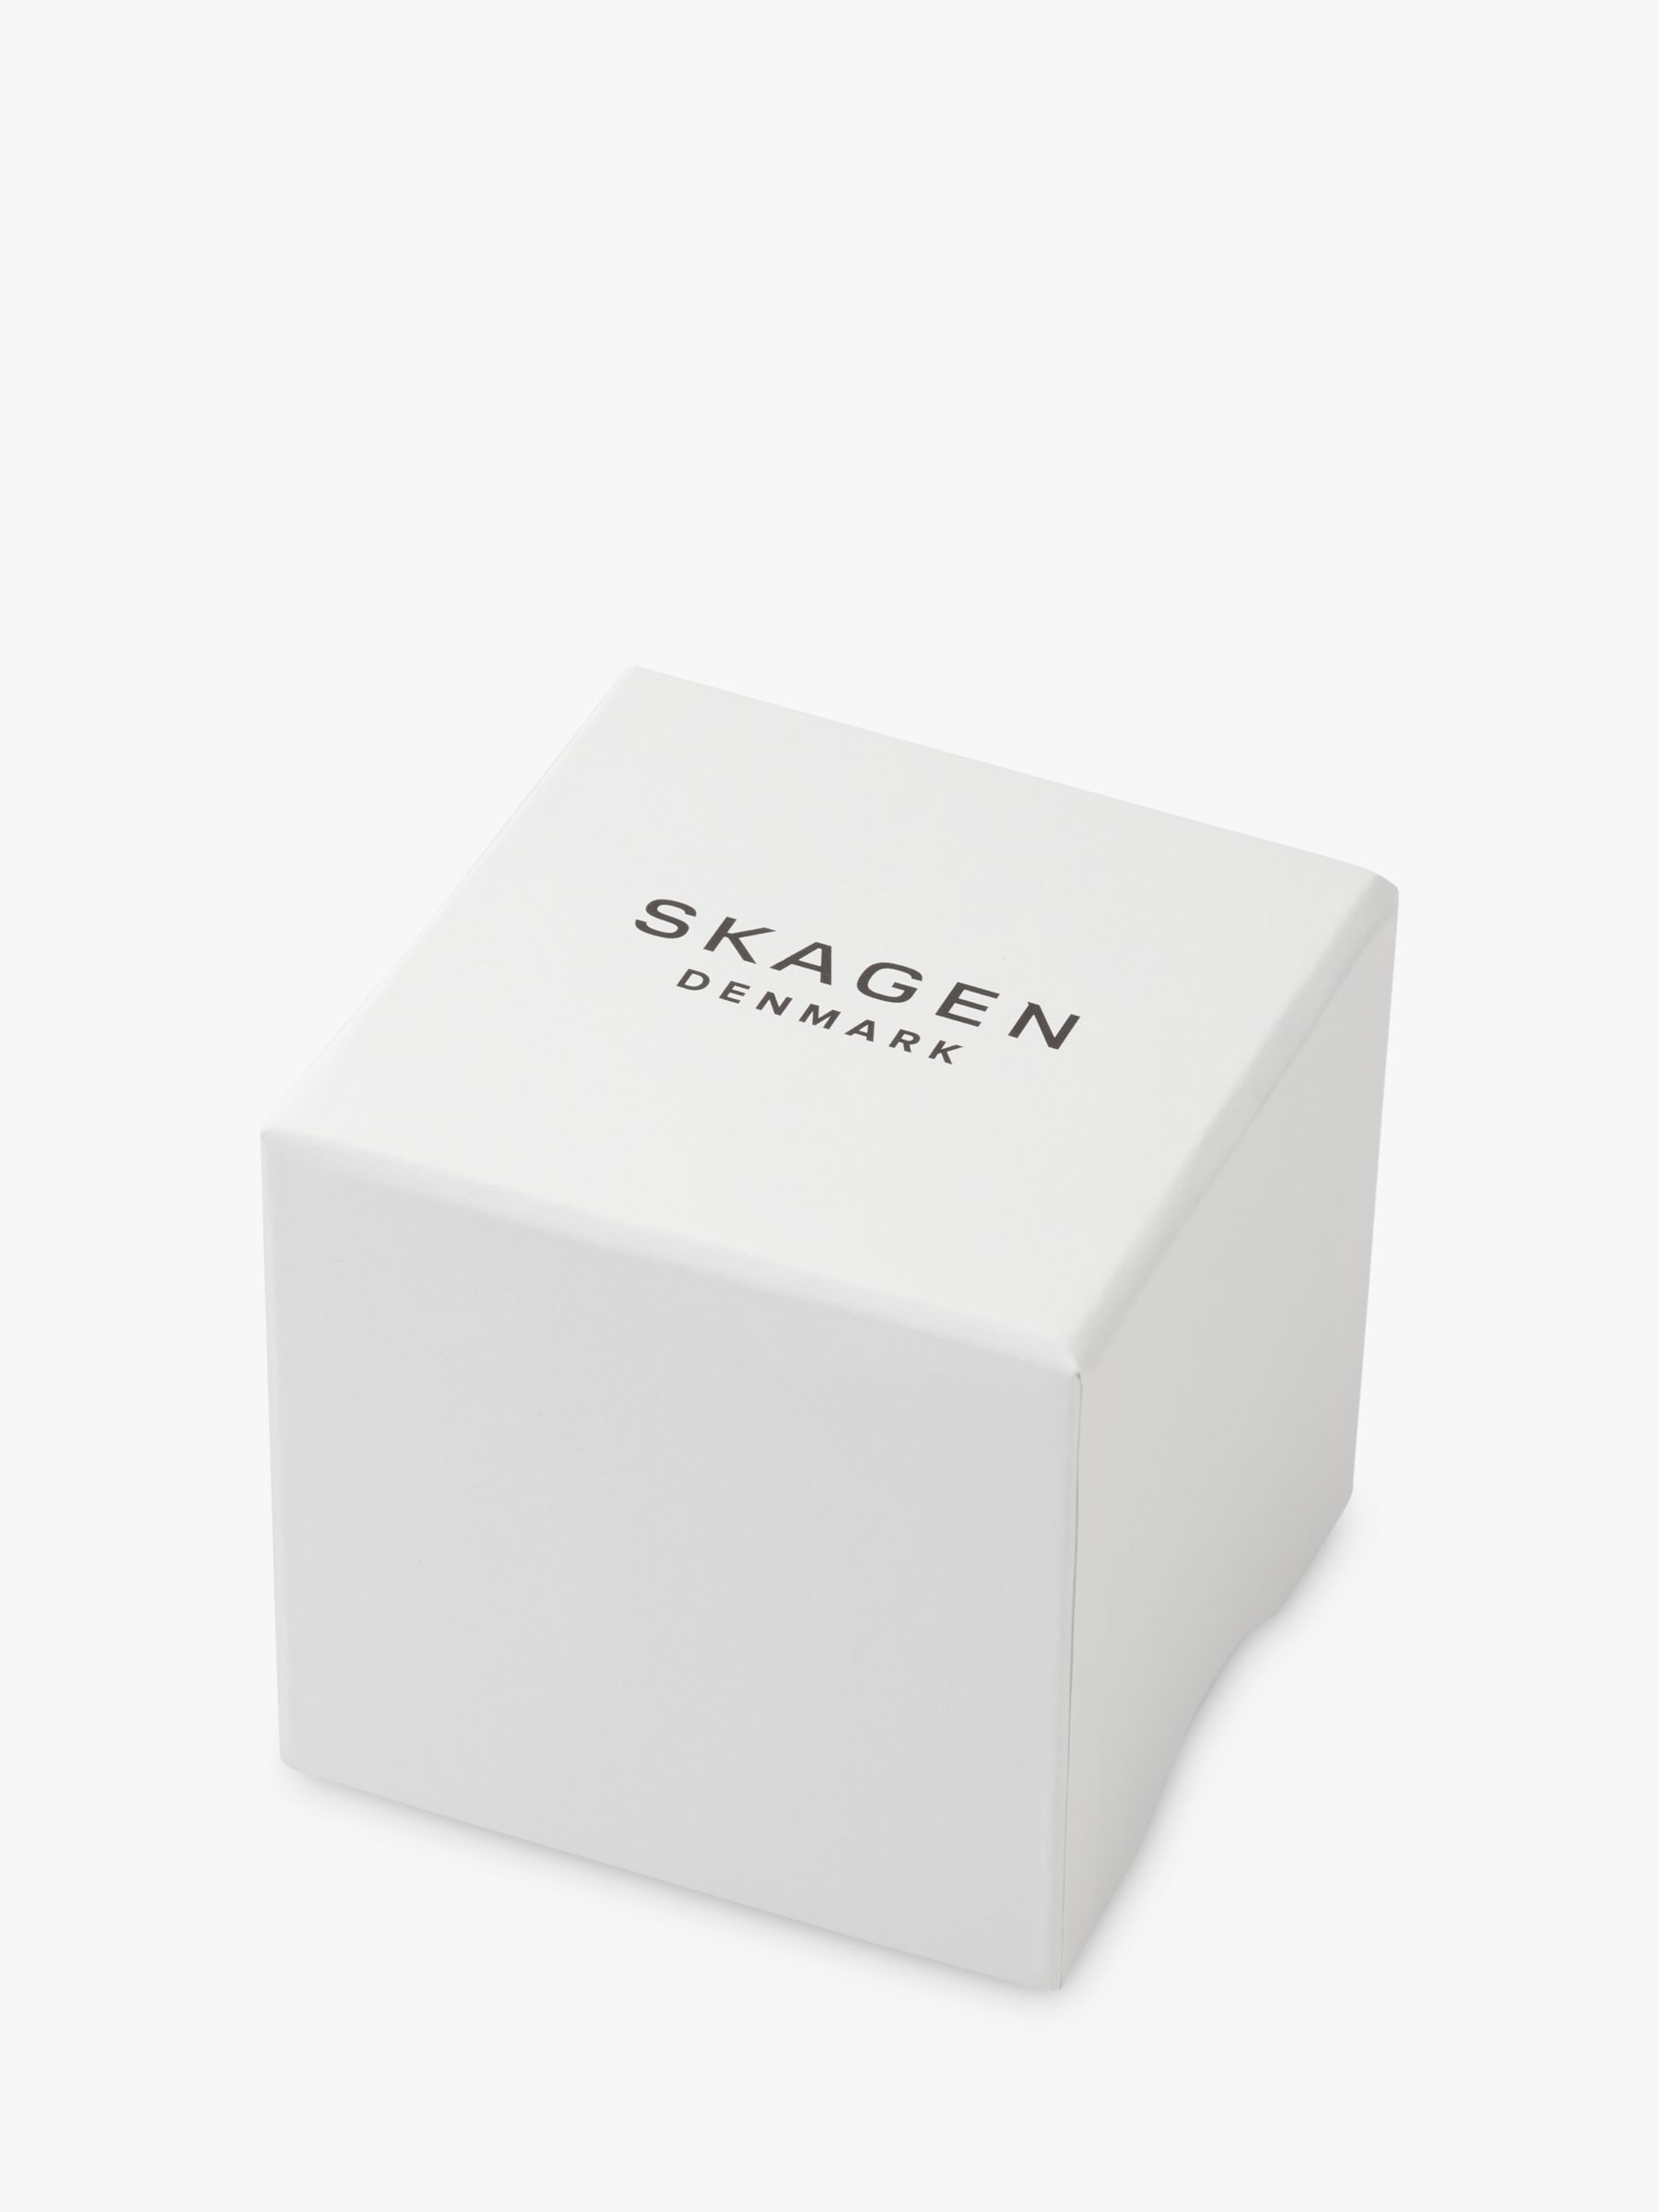 Buy Skagen Men's Kuppel Leather Strap Watch Online at johnlewis.com